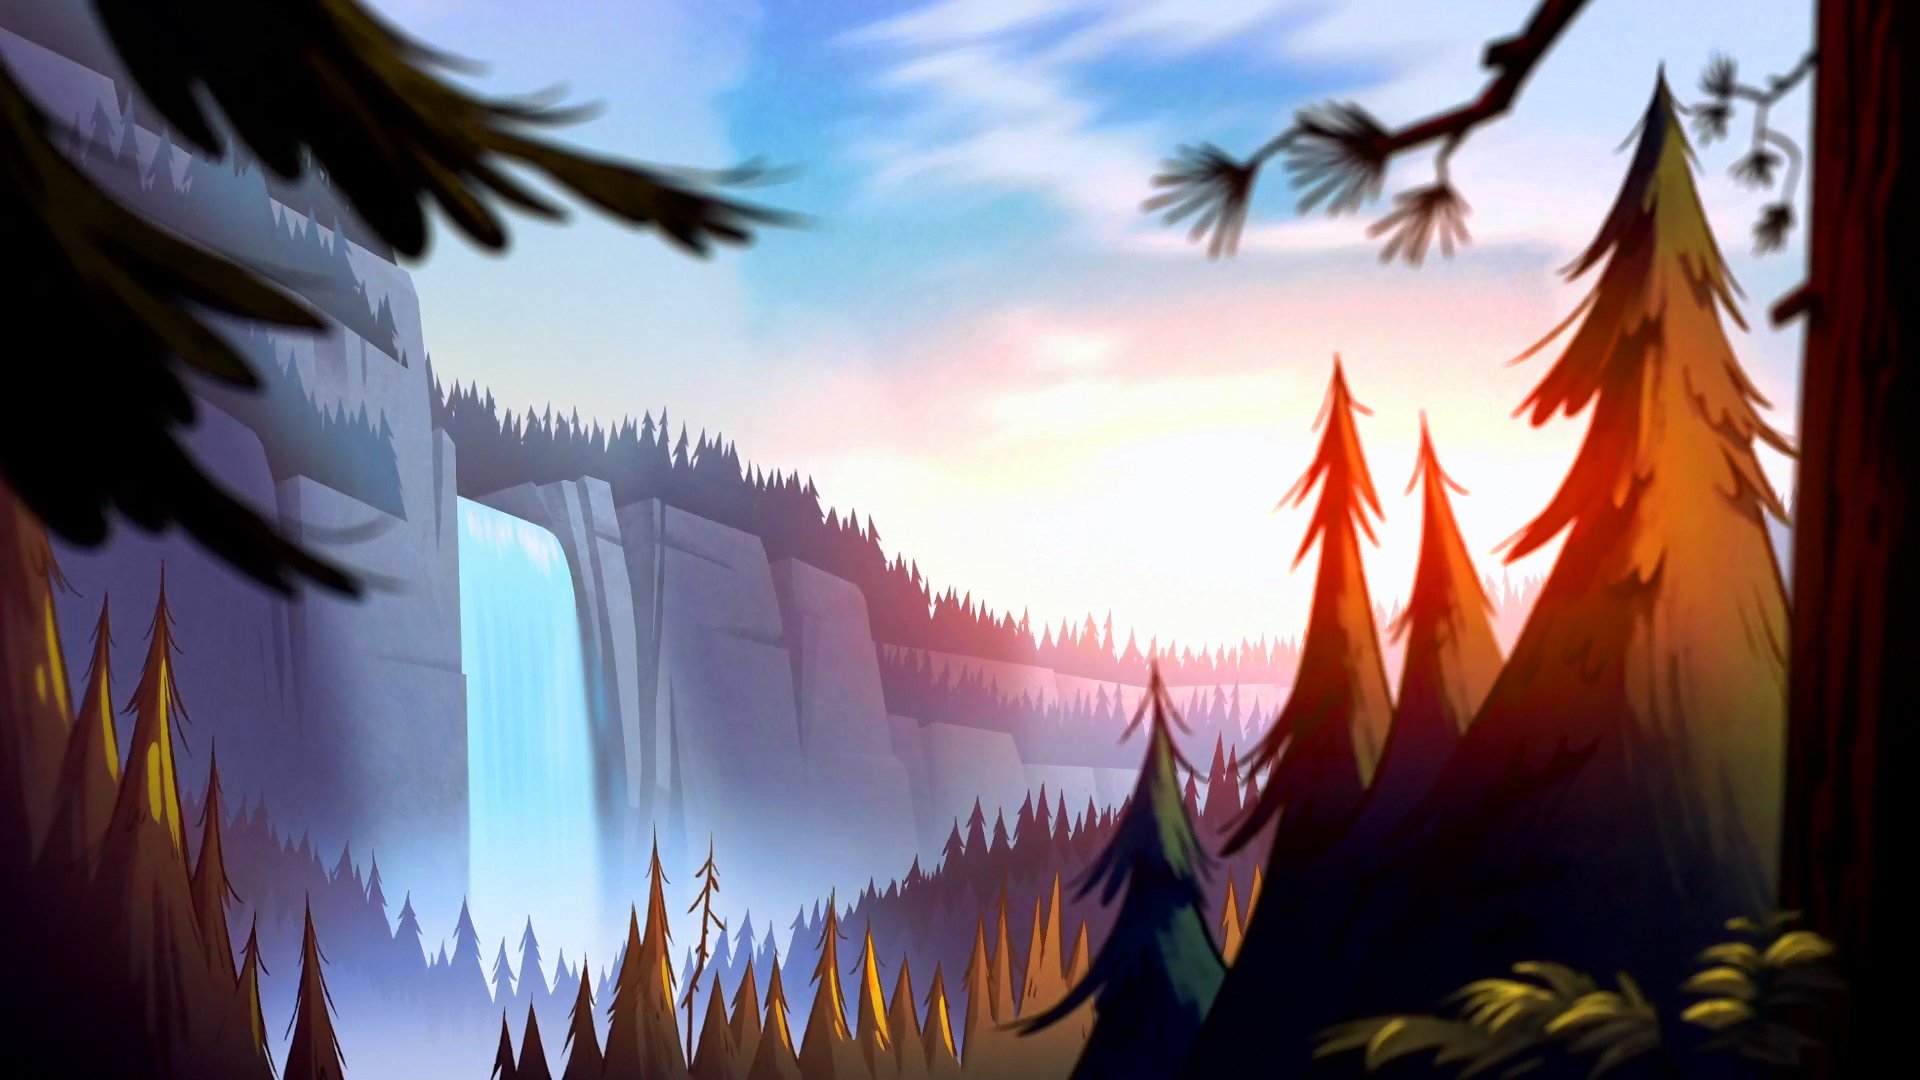 Gravity Falls Disney Family Animated Cartoon Series Edy Wallpaper